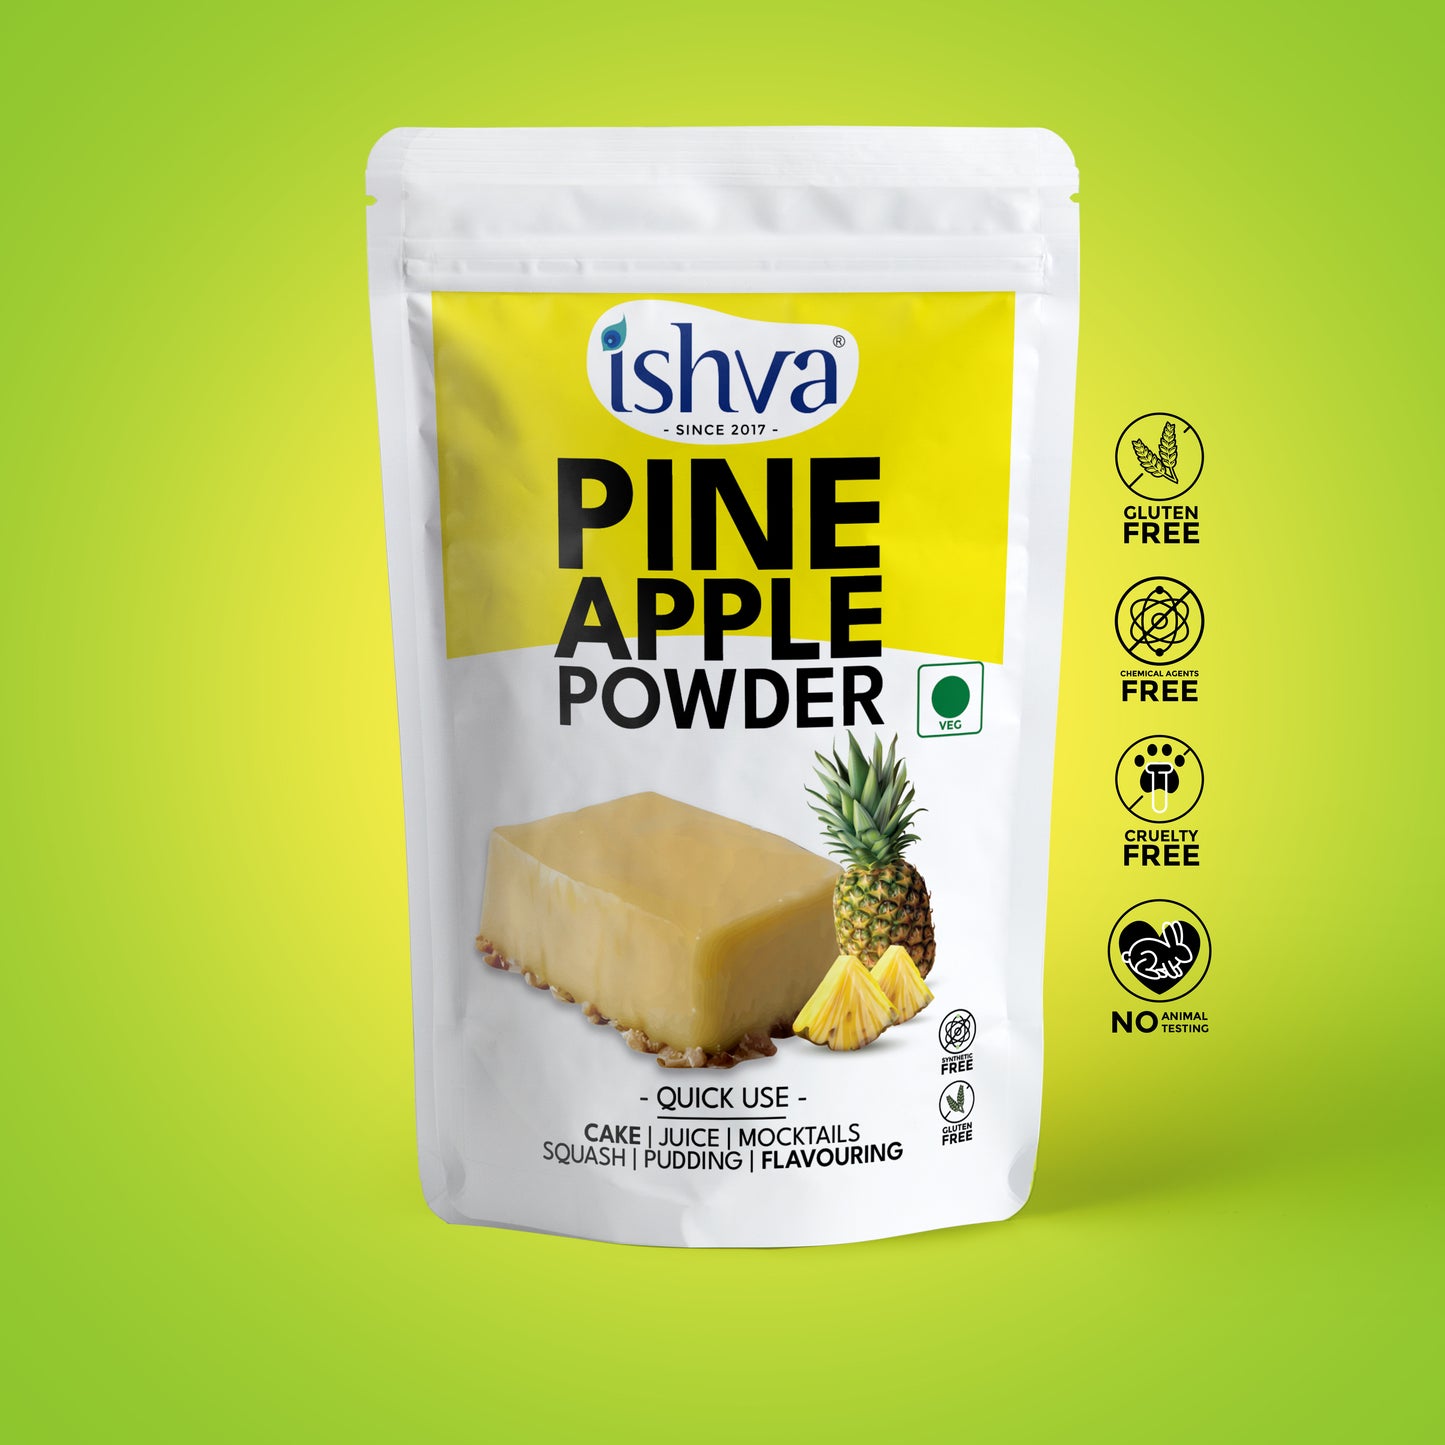 Ishva Pineapple Powder - Flavor for Desserts and Pudding